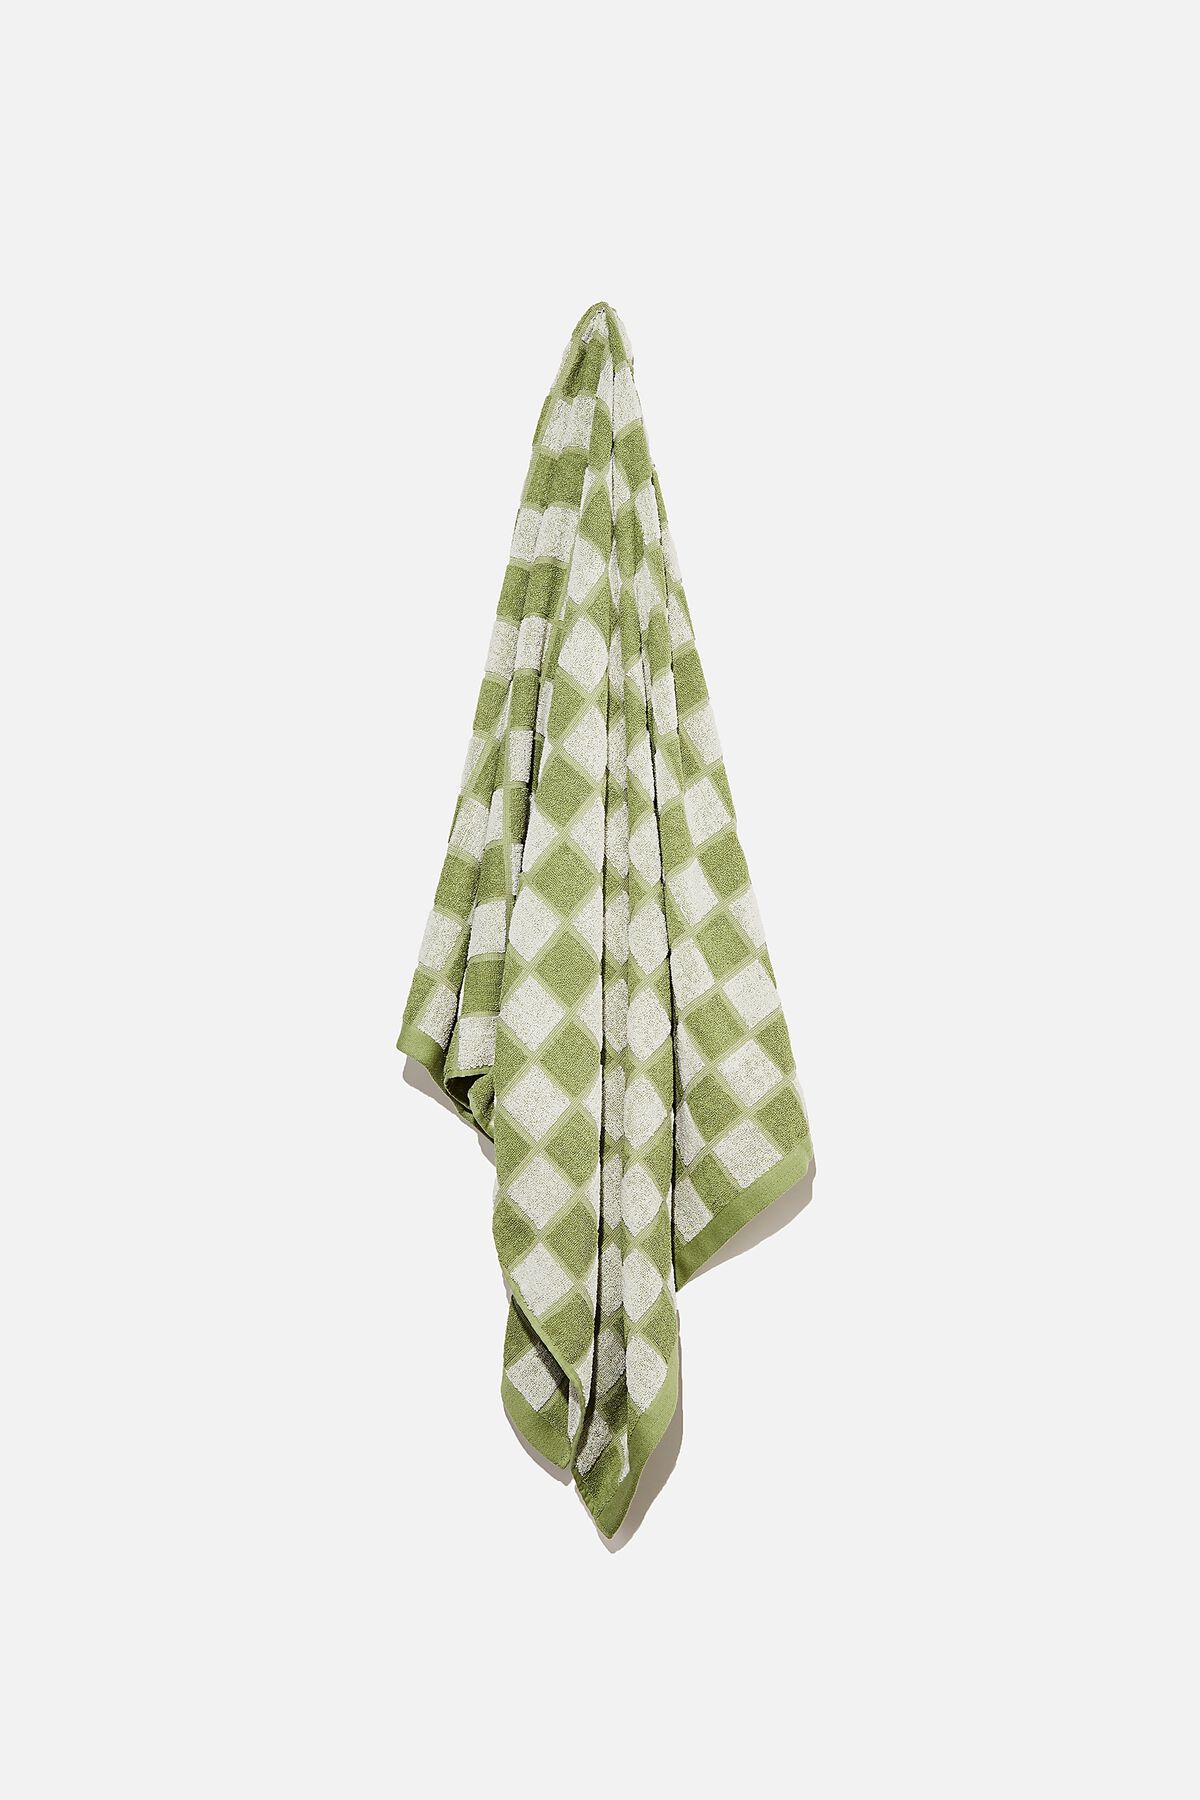 Bondi Rectangle Towel | Cotton On (ANZ)